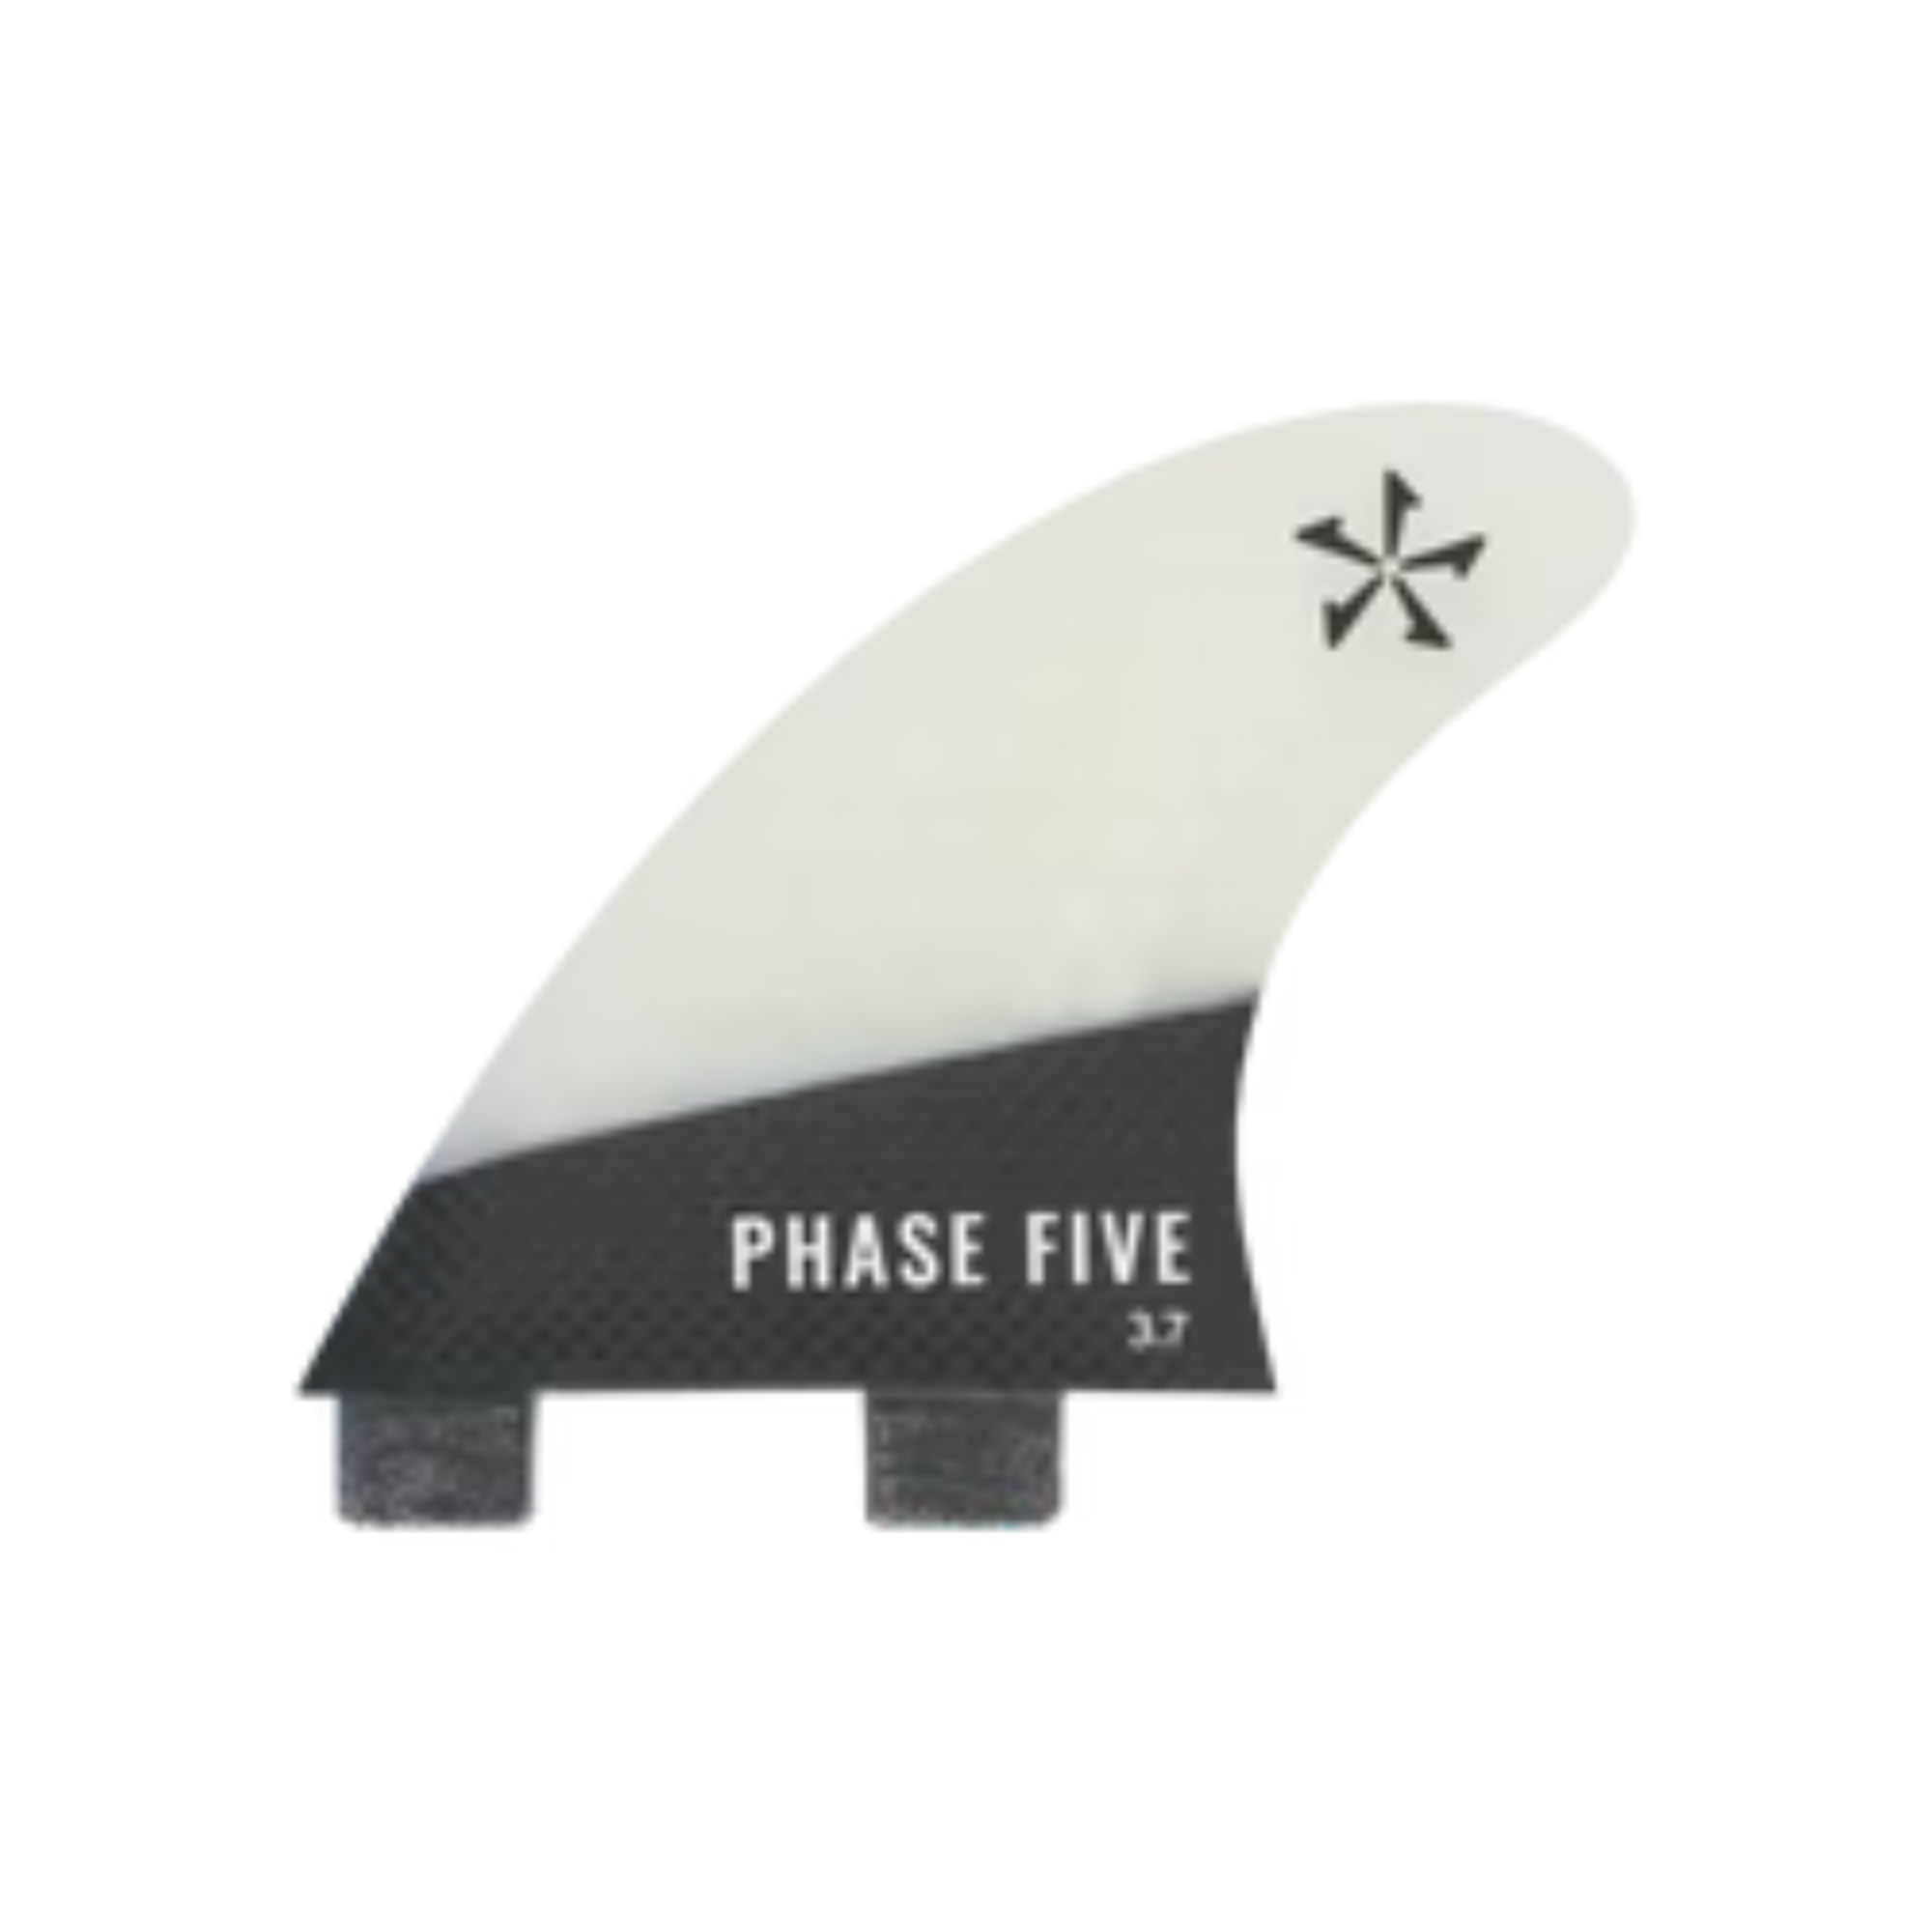 Phase Five 3.7 Surf Twin Set - Carbon